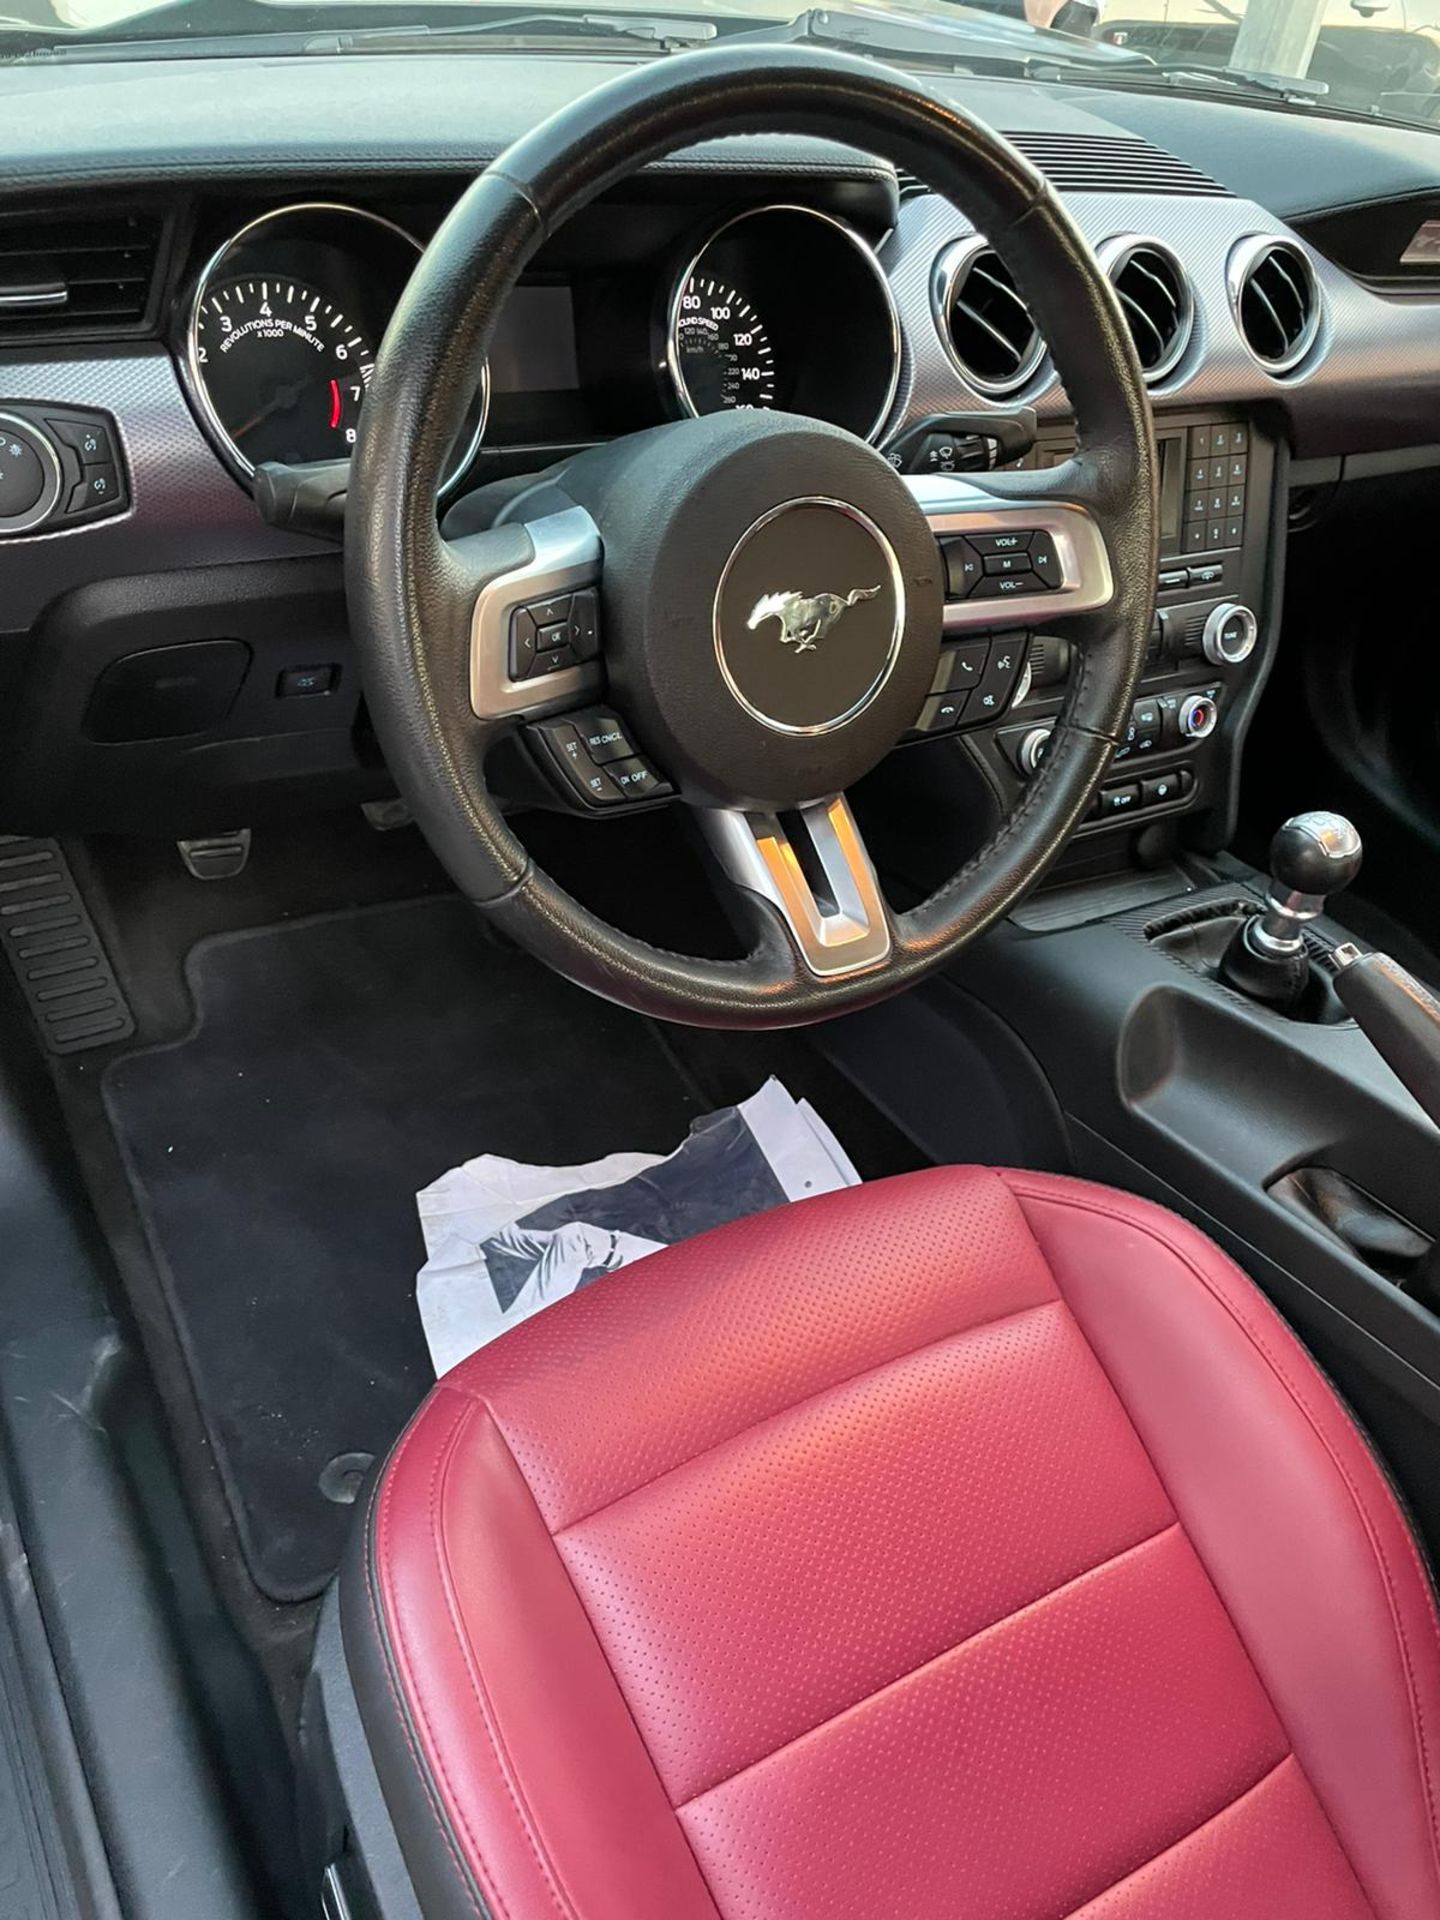 2016 Mustang 5.0 V8 Manual 35,000km in uk NOW *PLUS VAT* - Image 9 of 10